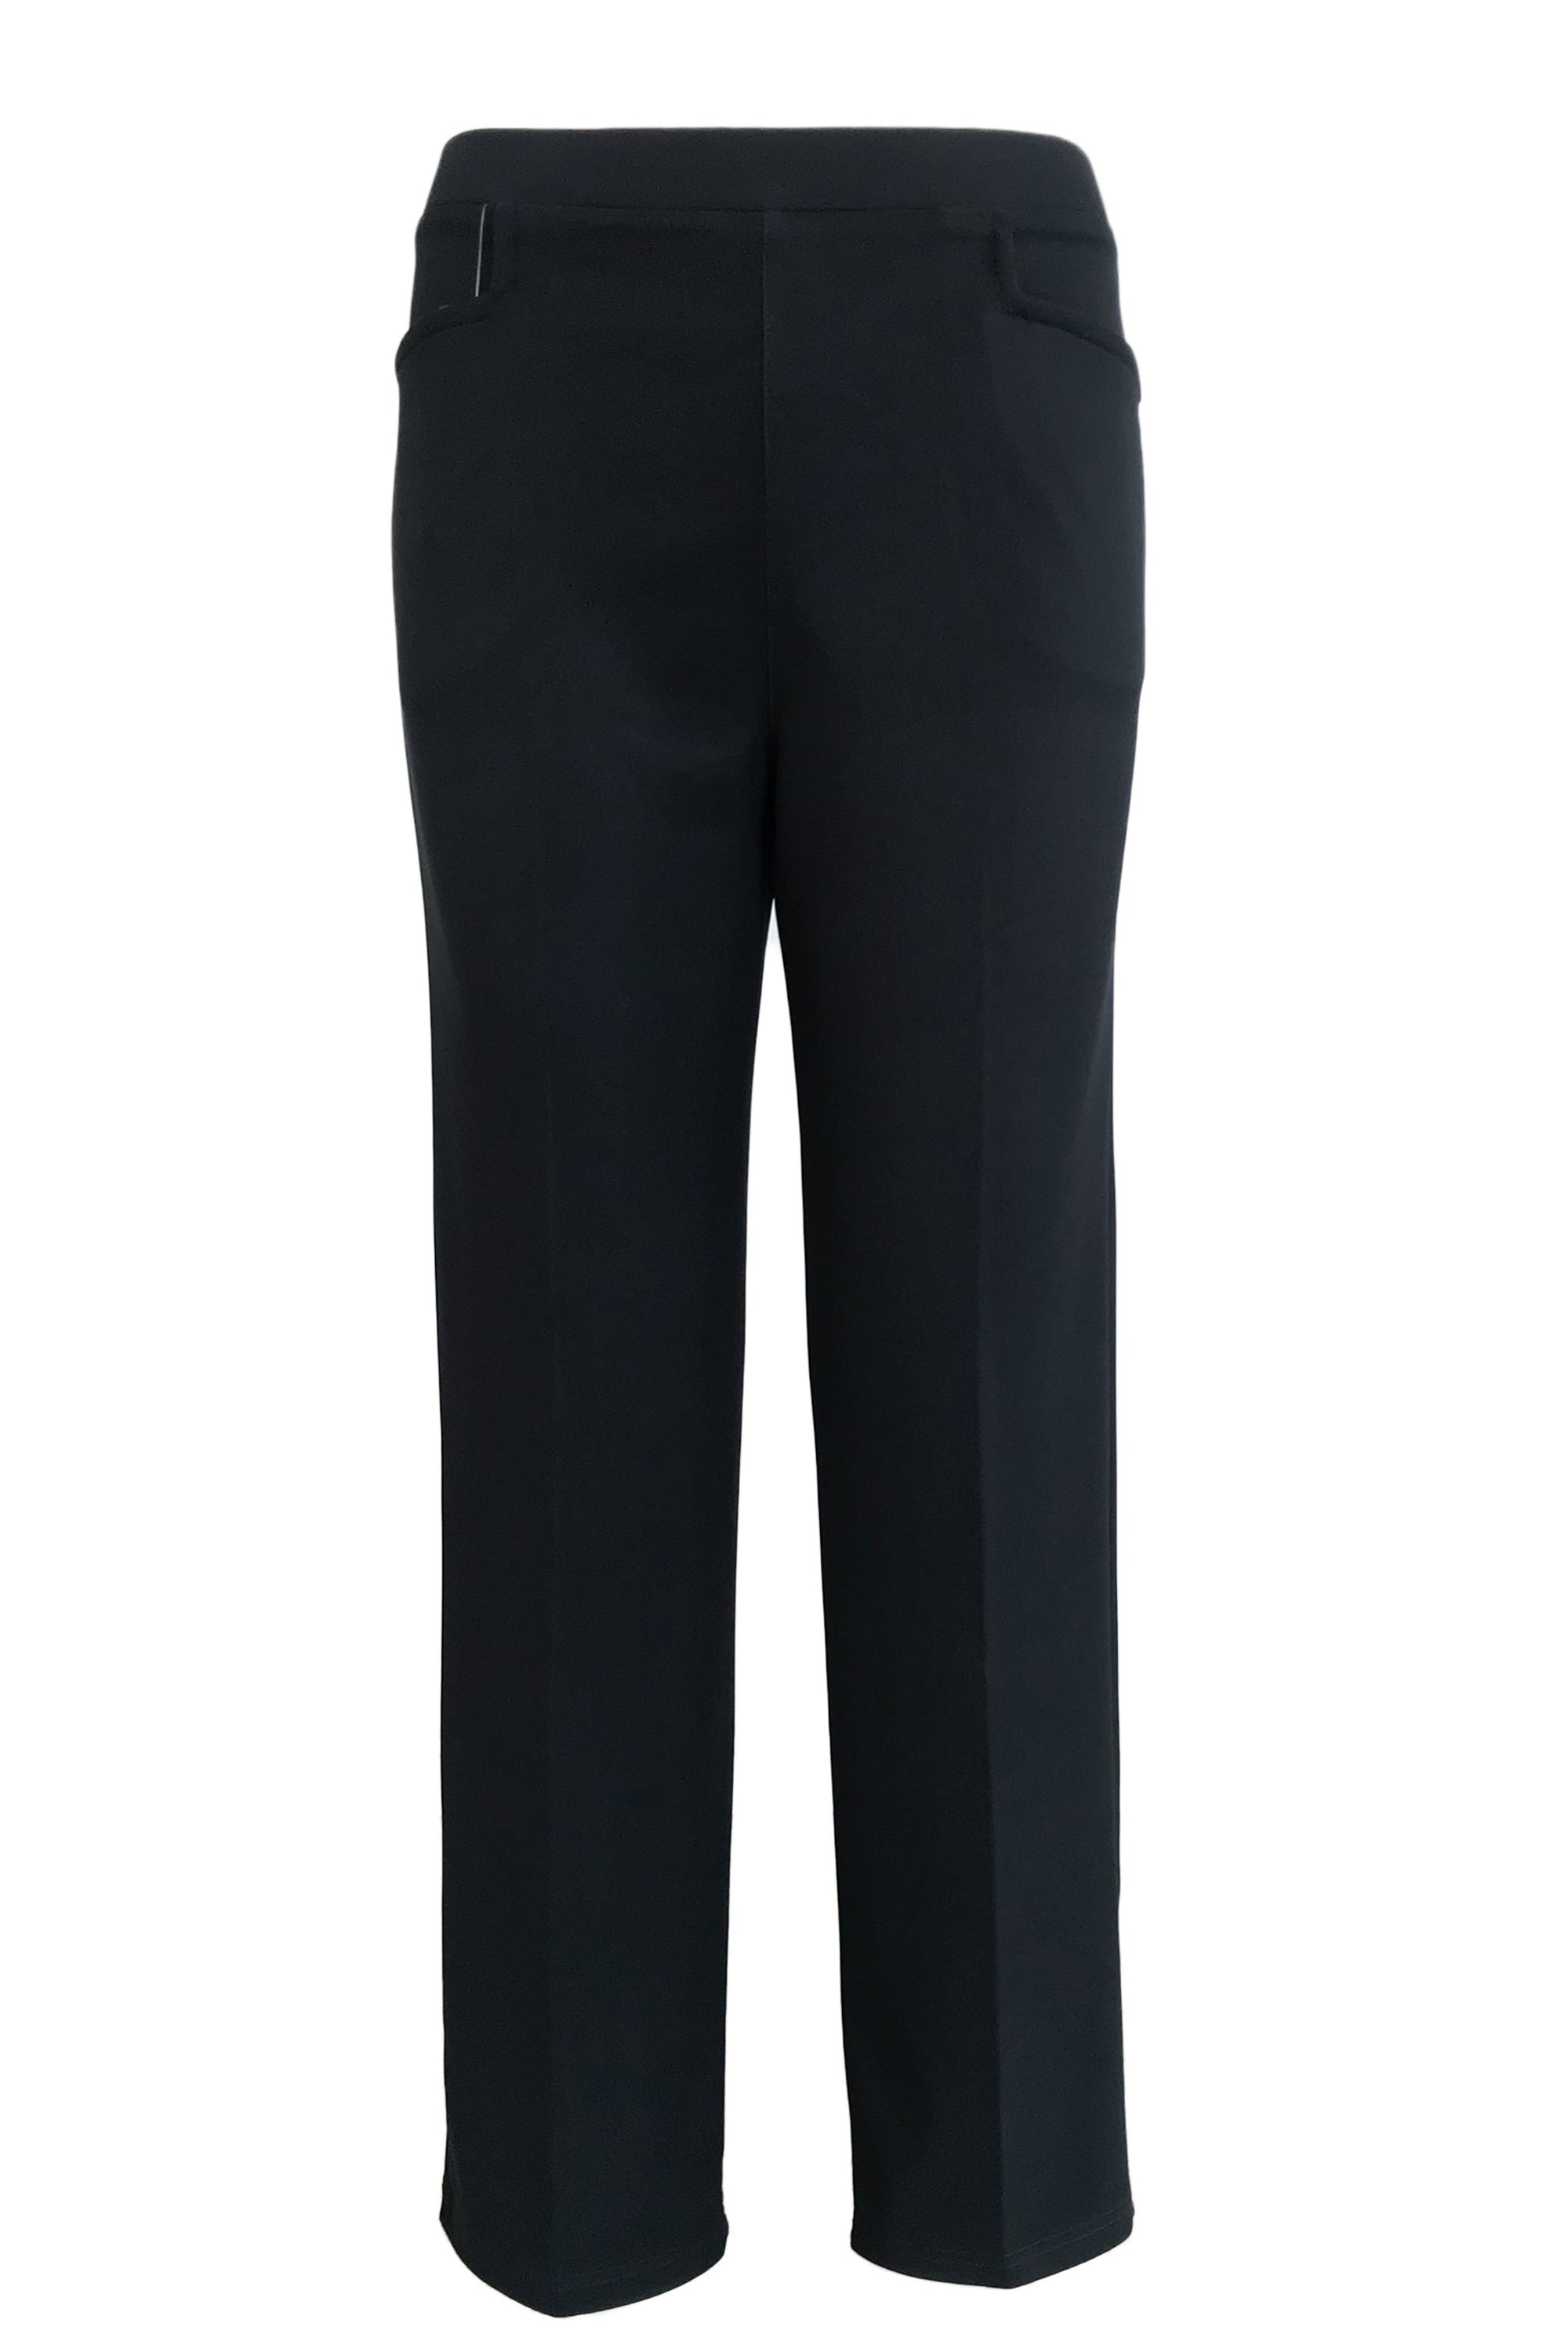 Straight Cut Plain Pants - Grey